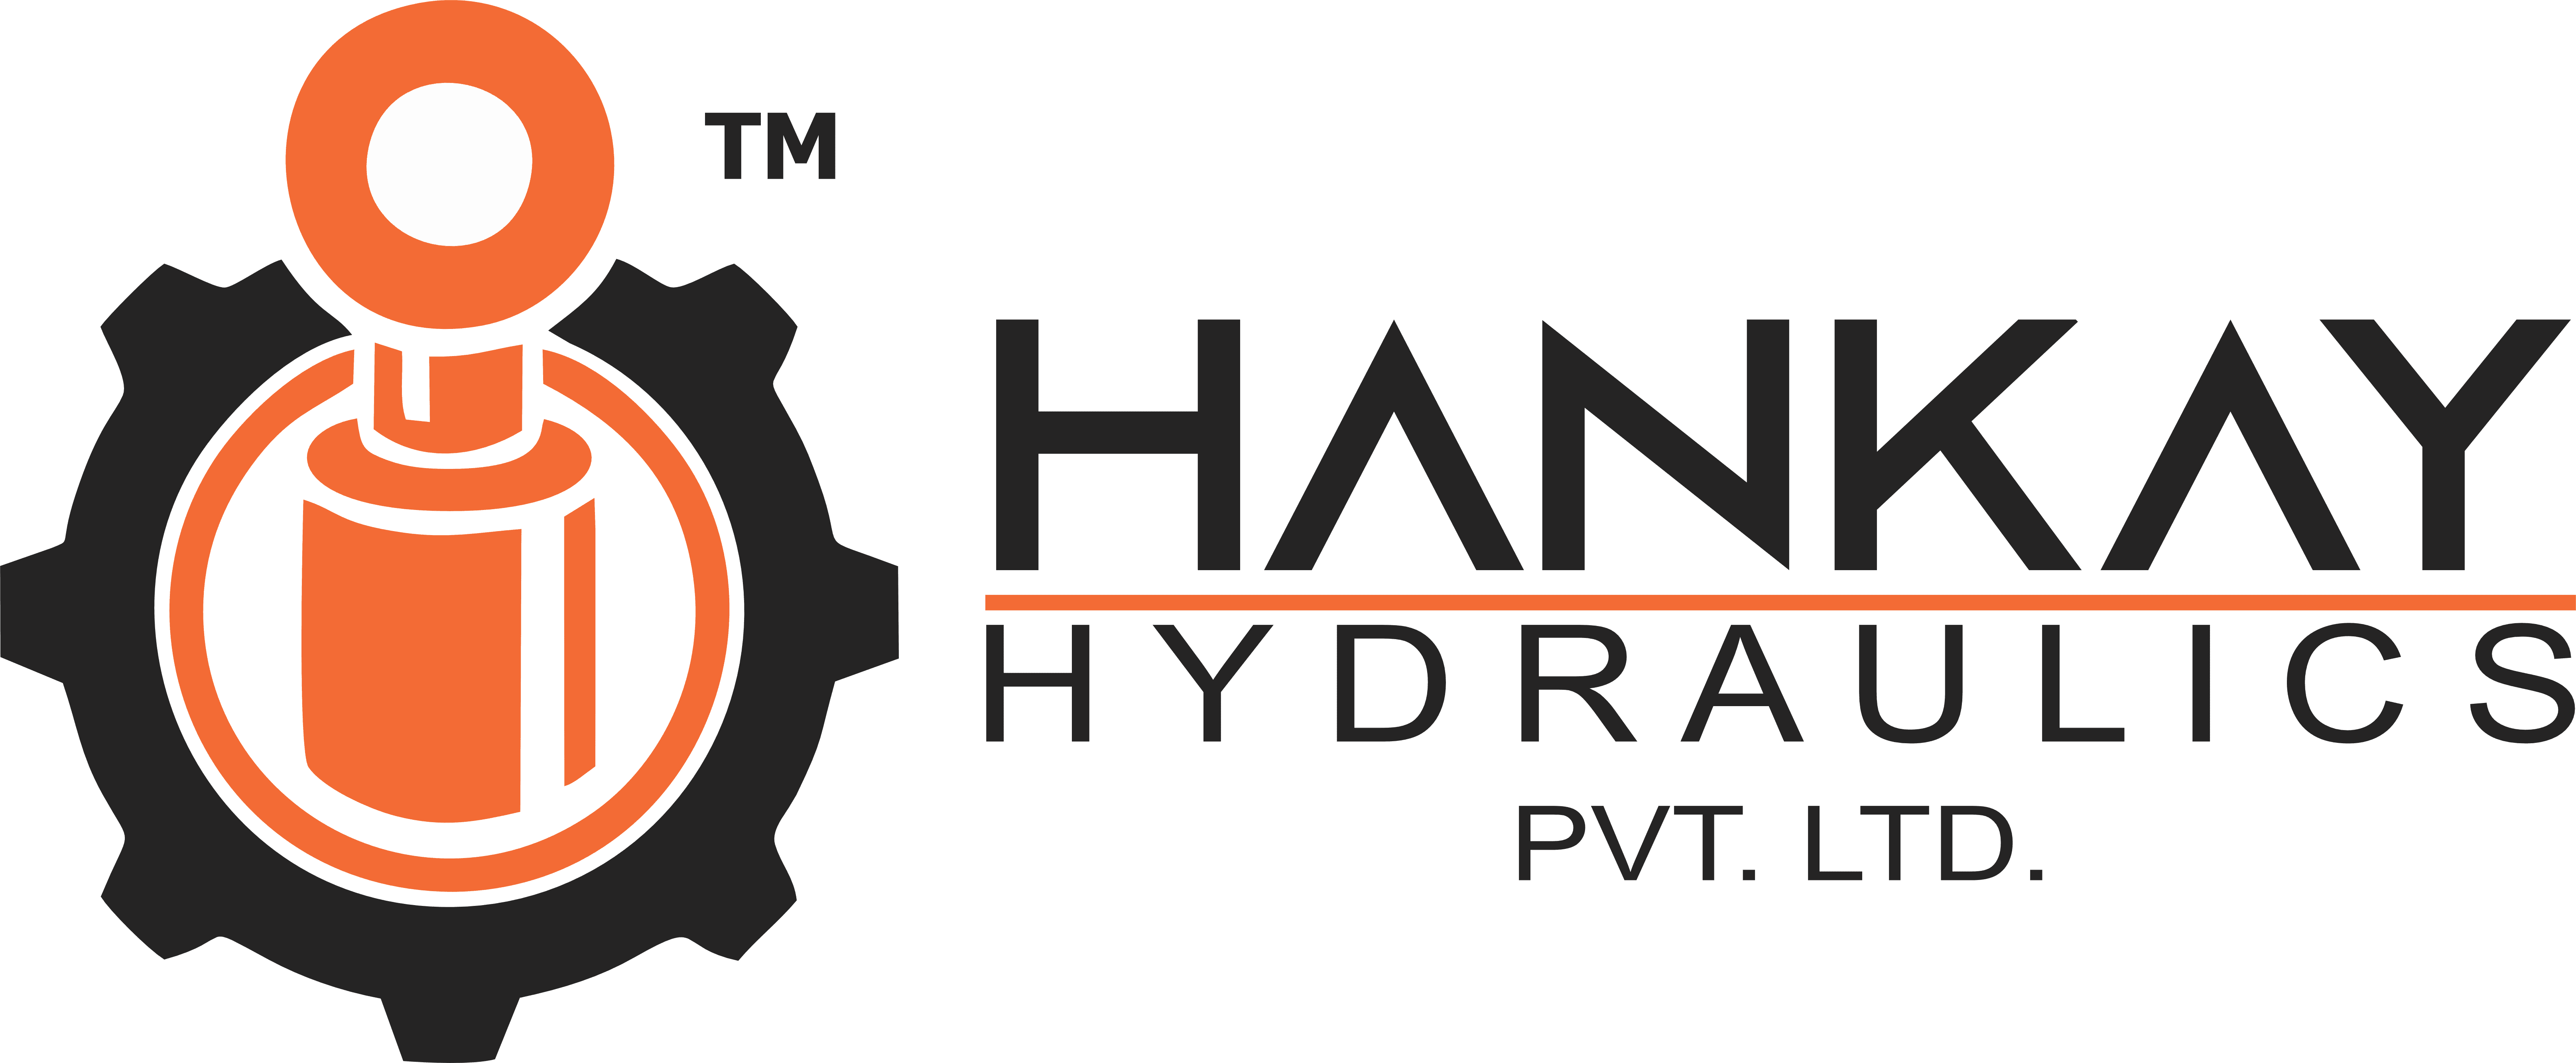 Hankay Hydraulics